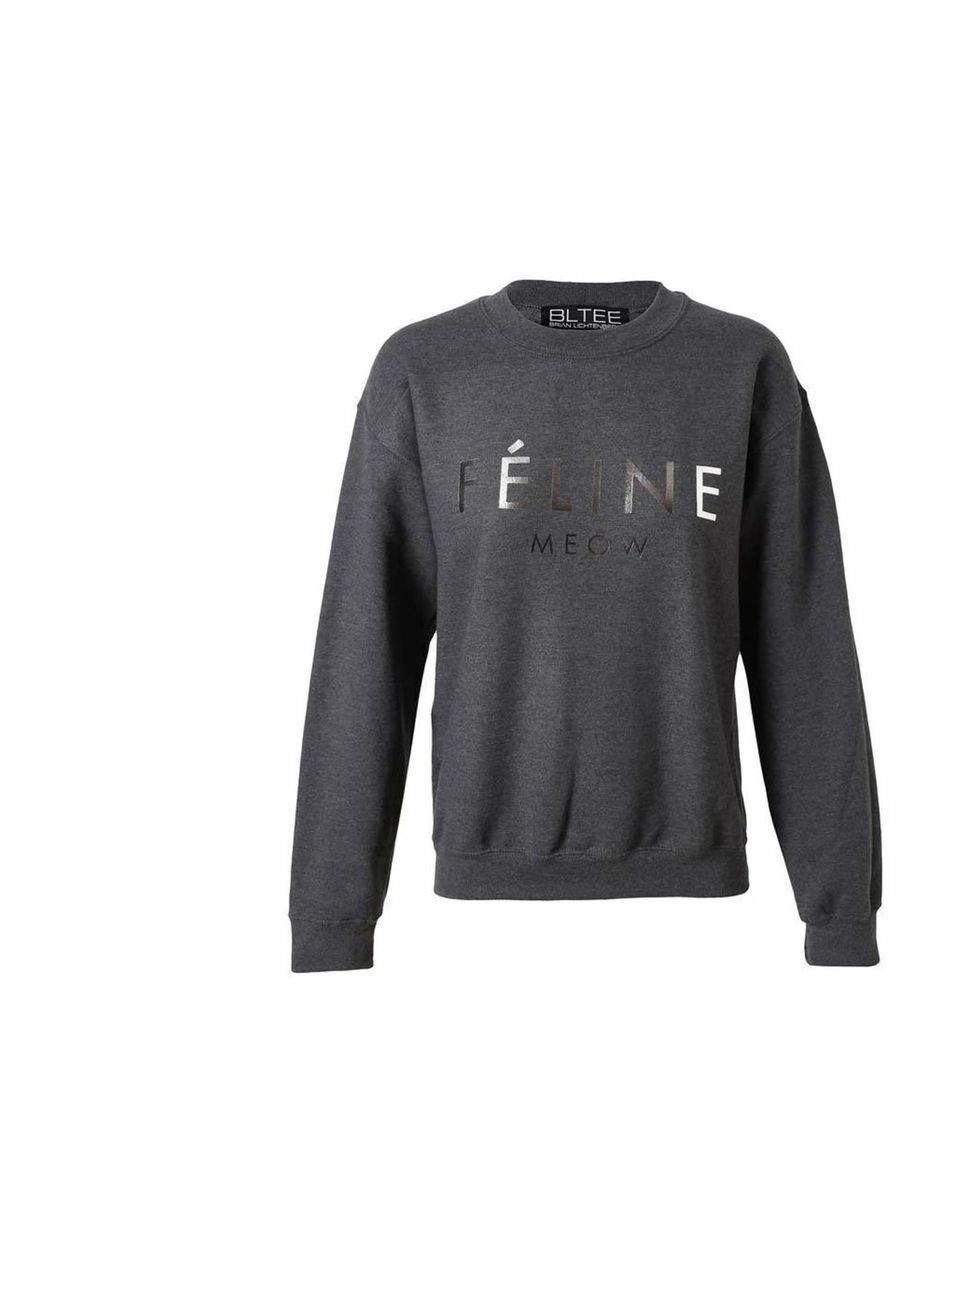 <p>Brian Lichtenberg 'Feline' sweatshirt, £100 at <a href="http://www.brownsfashion.com/product/031G22650007/080/charcoal-cotton-39feline39-sweatshirt">Browns </a></p>